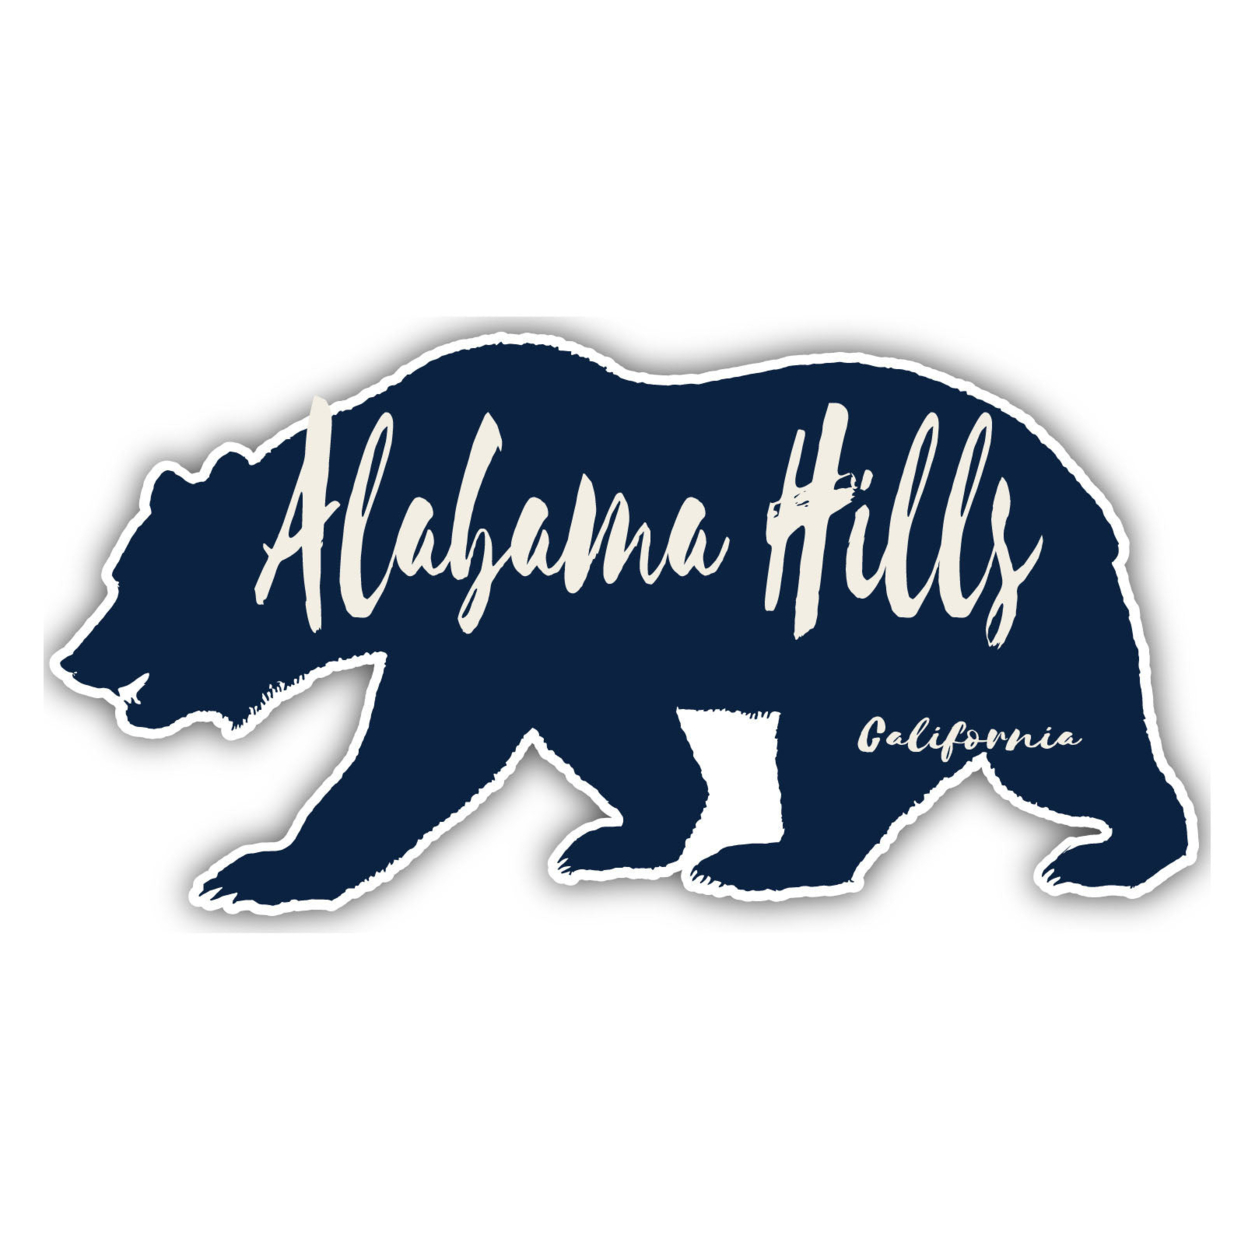 Alabama Hills California Souvenir Decorative Stickers (Choose Theme And Size) - Single Unit, 6-Inch, Bear